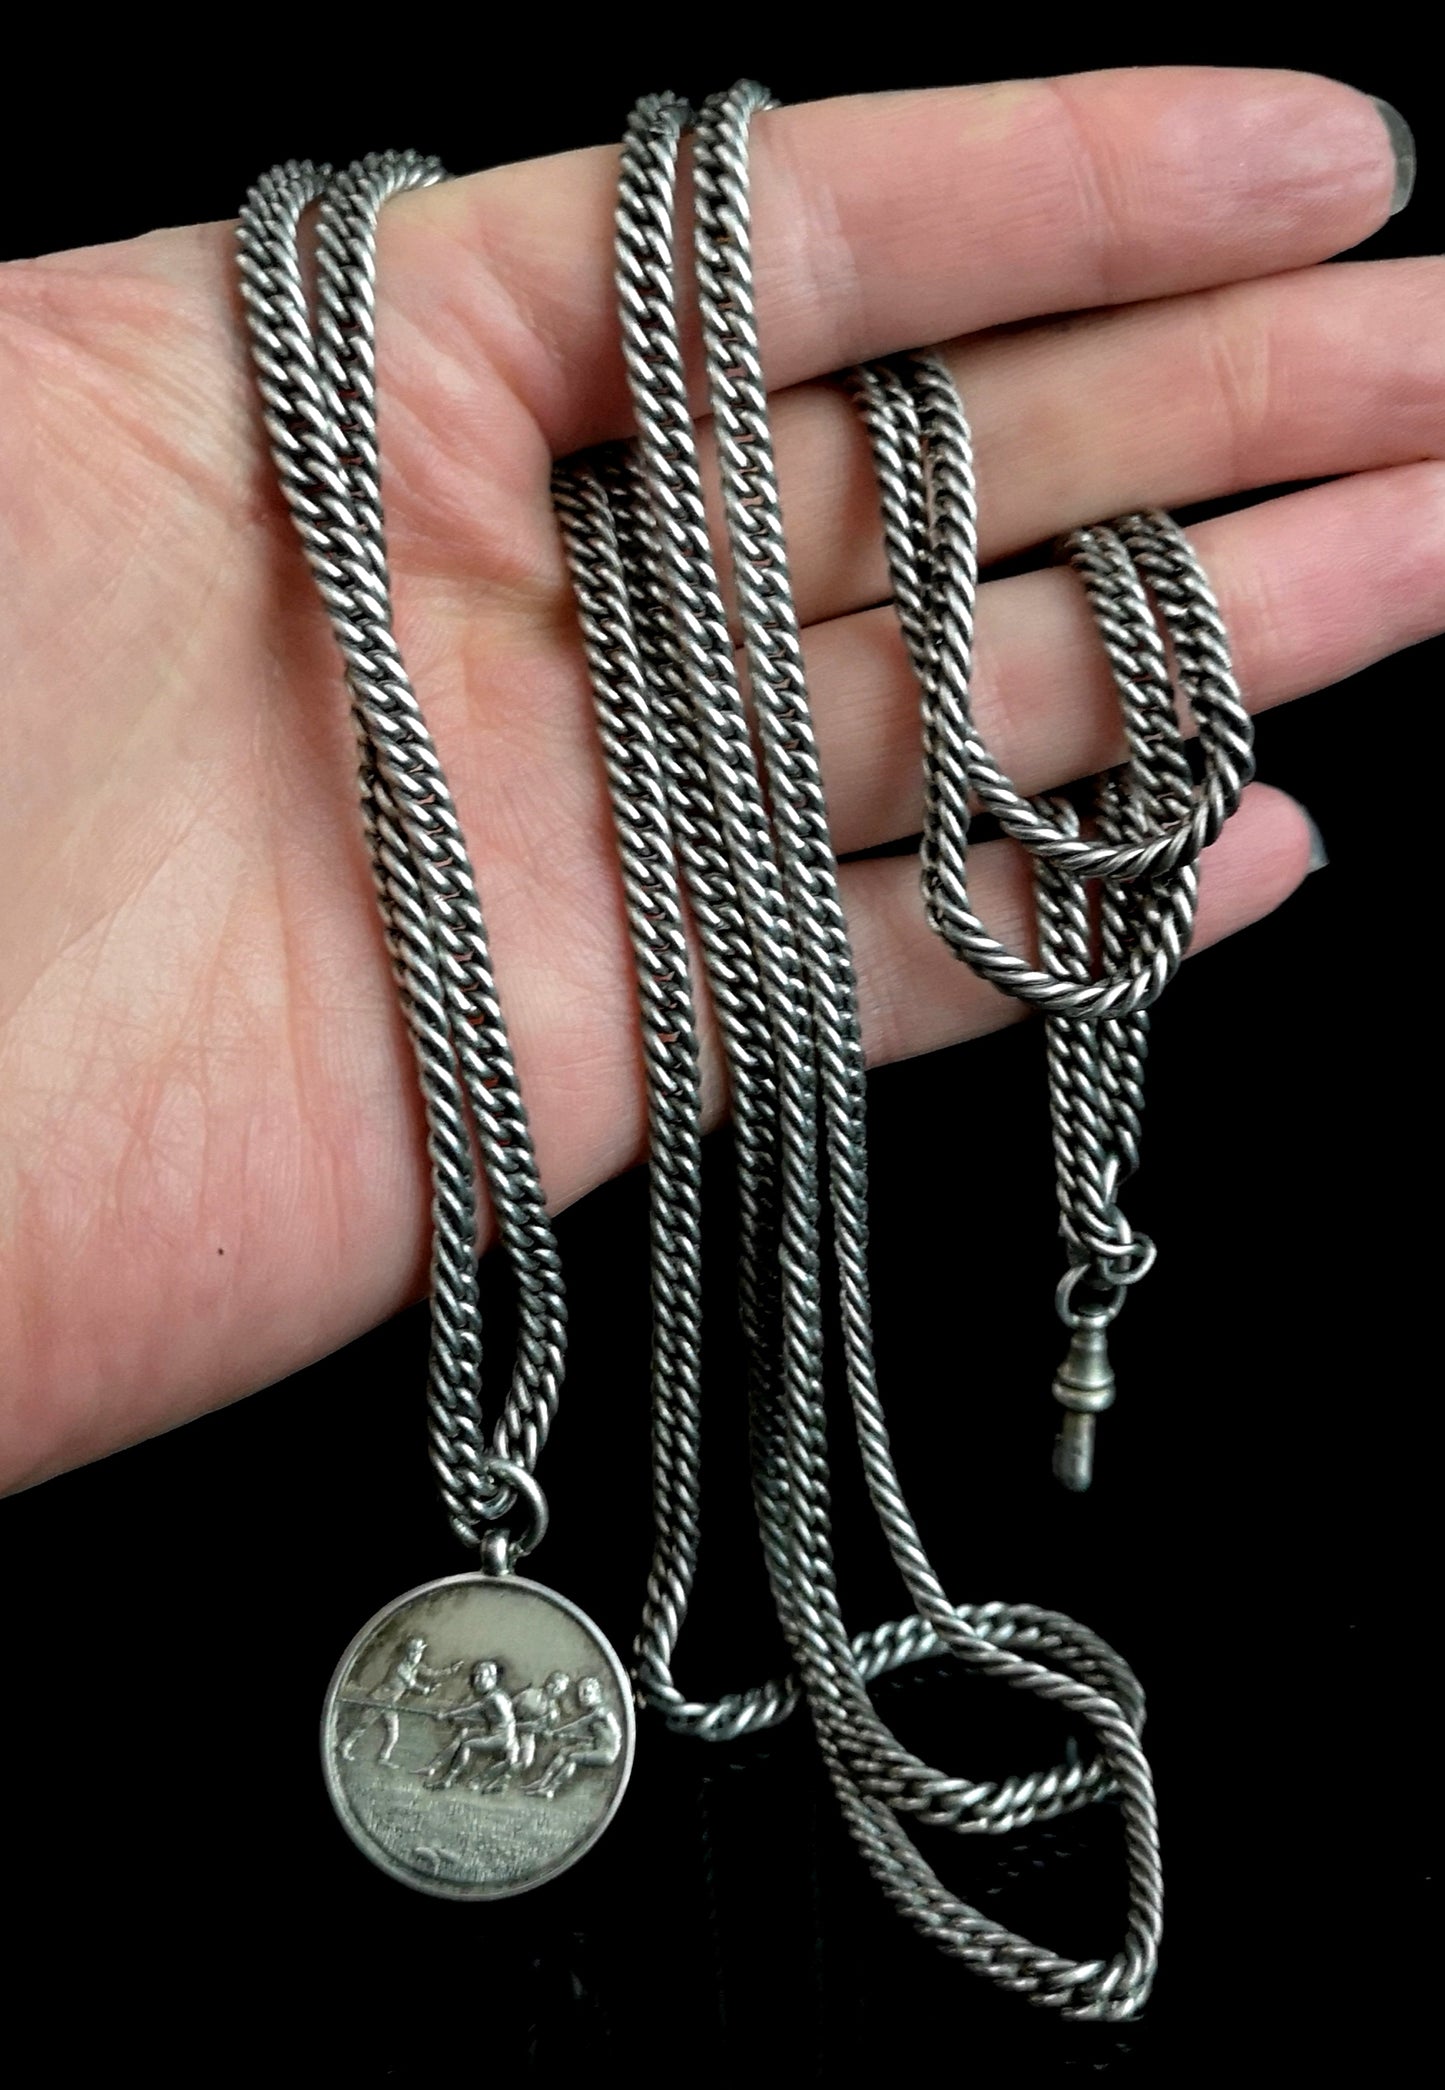 Antique Victorian silver longuard chain, pendant